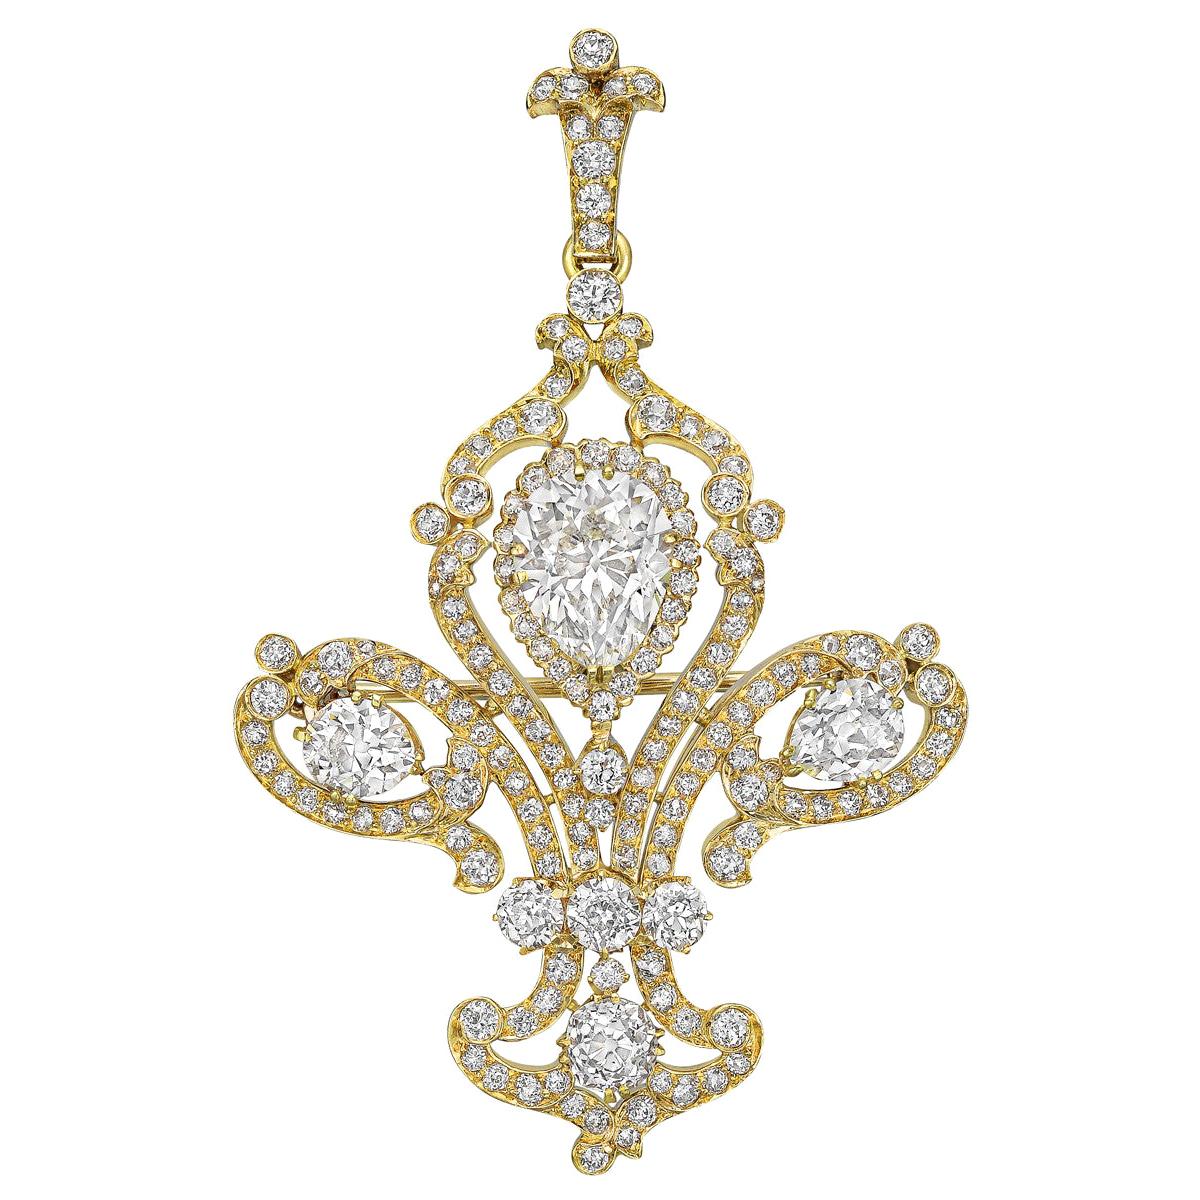 Tiffany & Co. Late 19th Century Diamond Fleur de Lis Pendant Brooch